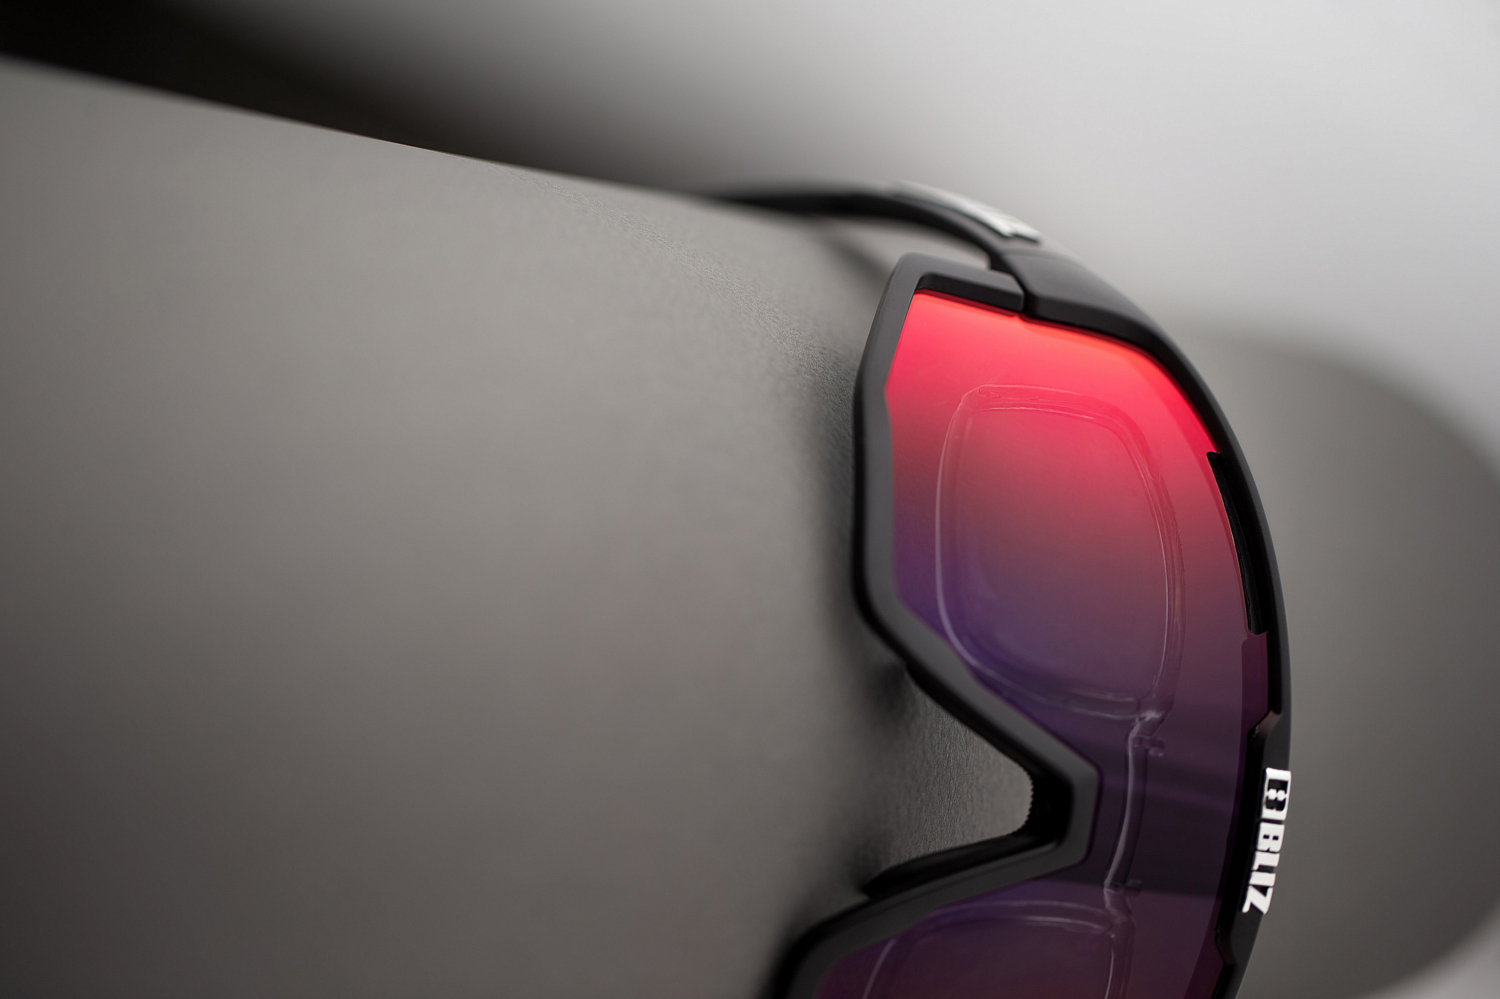 Очки солнцезащитные BLIZ Vision Matt Black/Smoke Red Mult S3